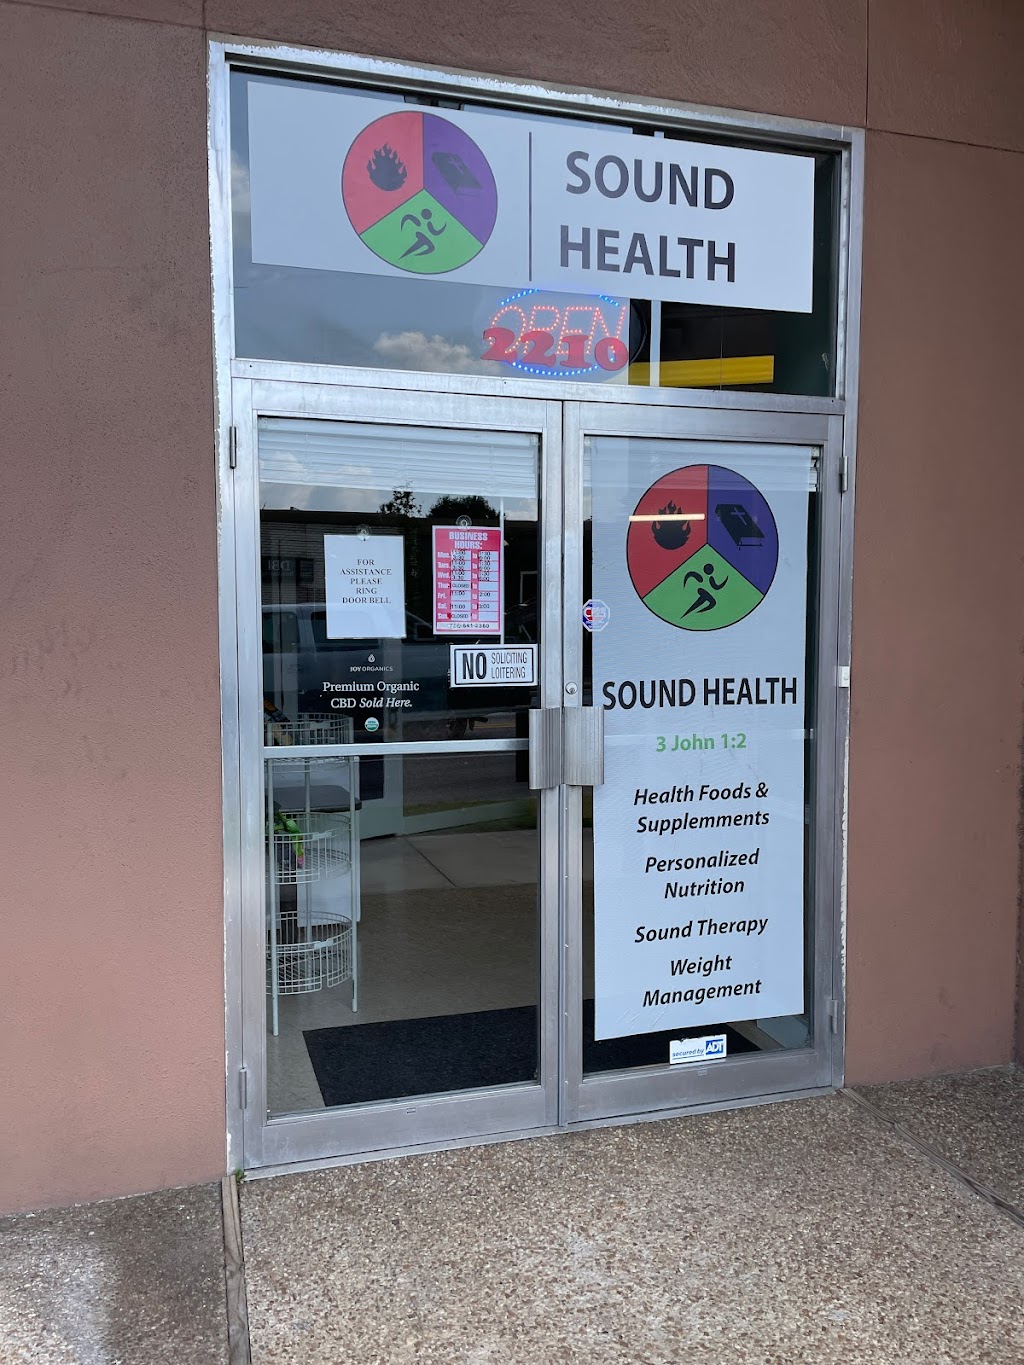 Sound Health | 2210 Wynnton Rd Ste. 100, Columbus, GA 31906, USA | Phone: (706) 641-2360